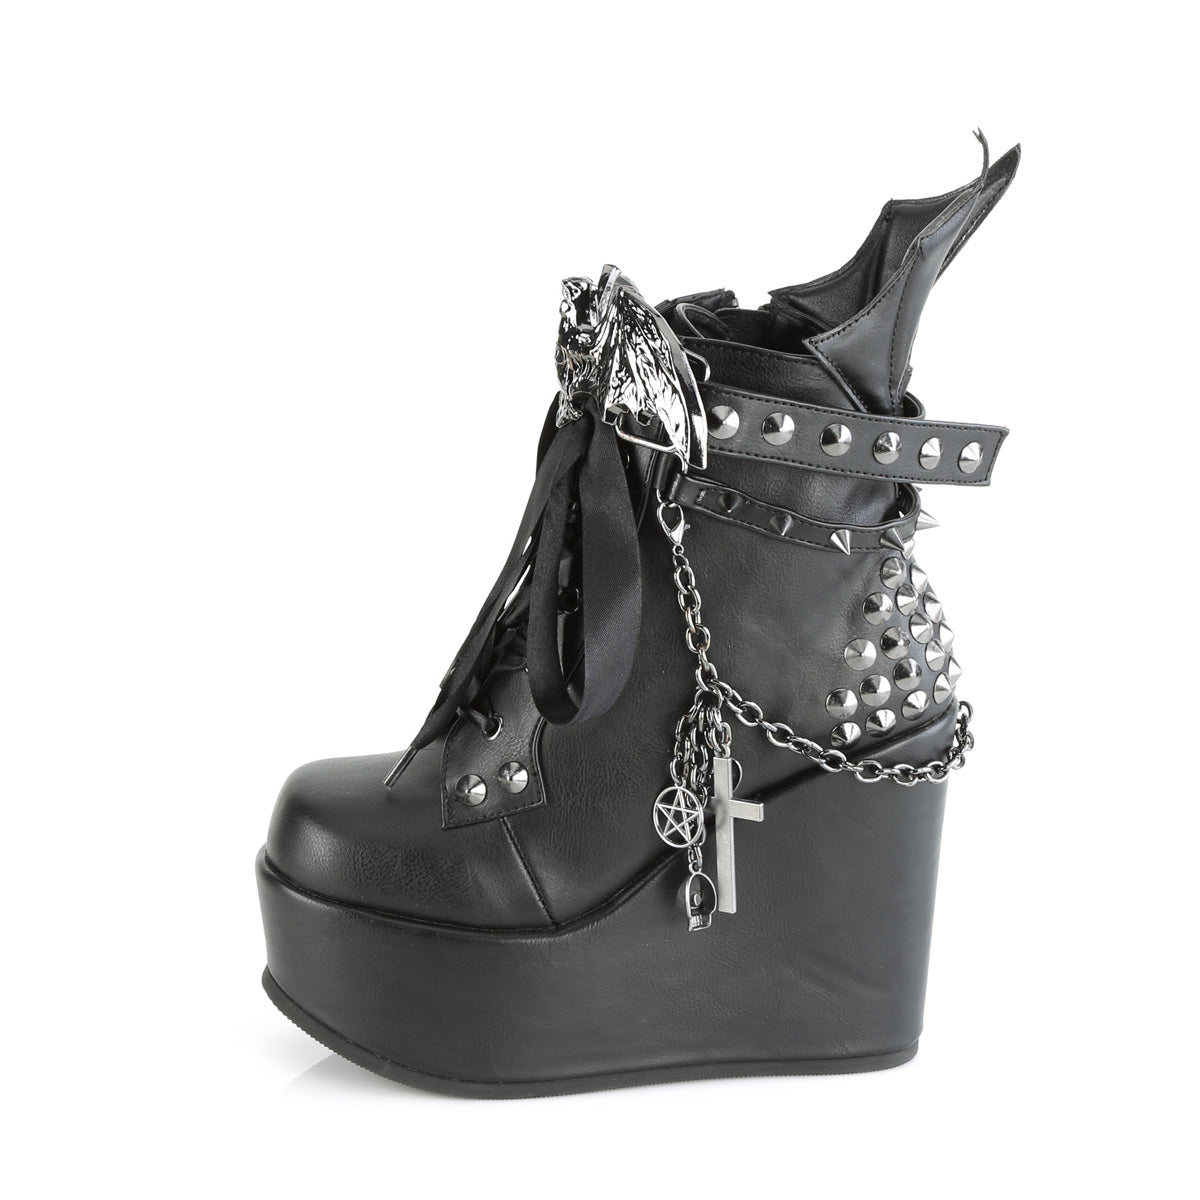 POISON-107 Demonia Black Vegan Leather Women's Ankle Boots [Demonia Cult Alternative Footwear]